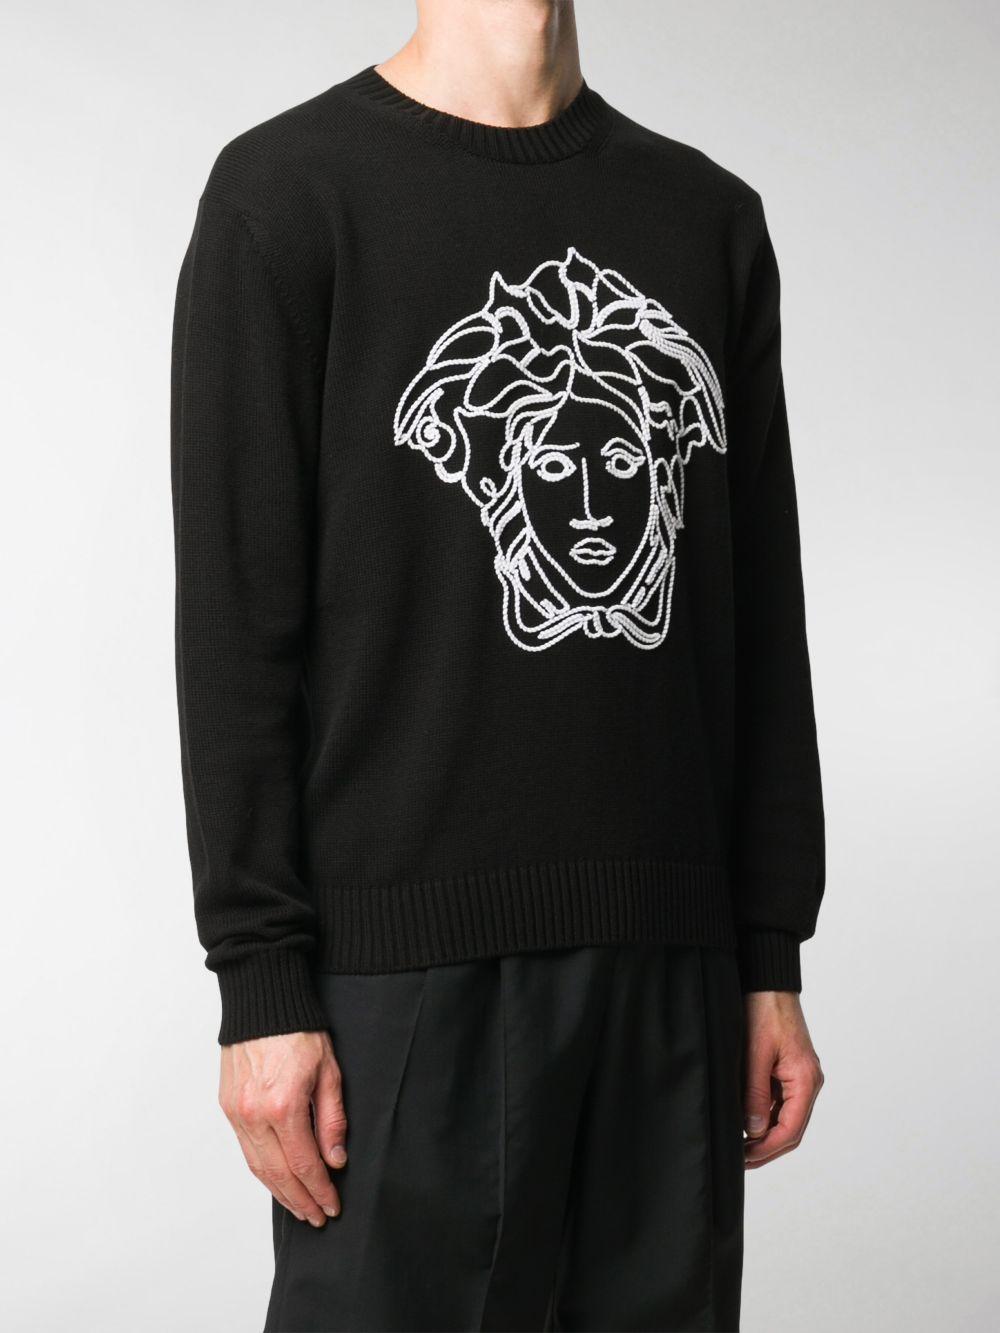 Versace Wool Medusa Embroidered Sweatshirt in Black for Men - Lyst